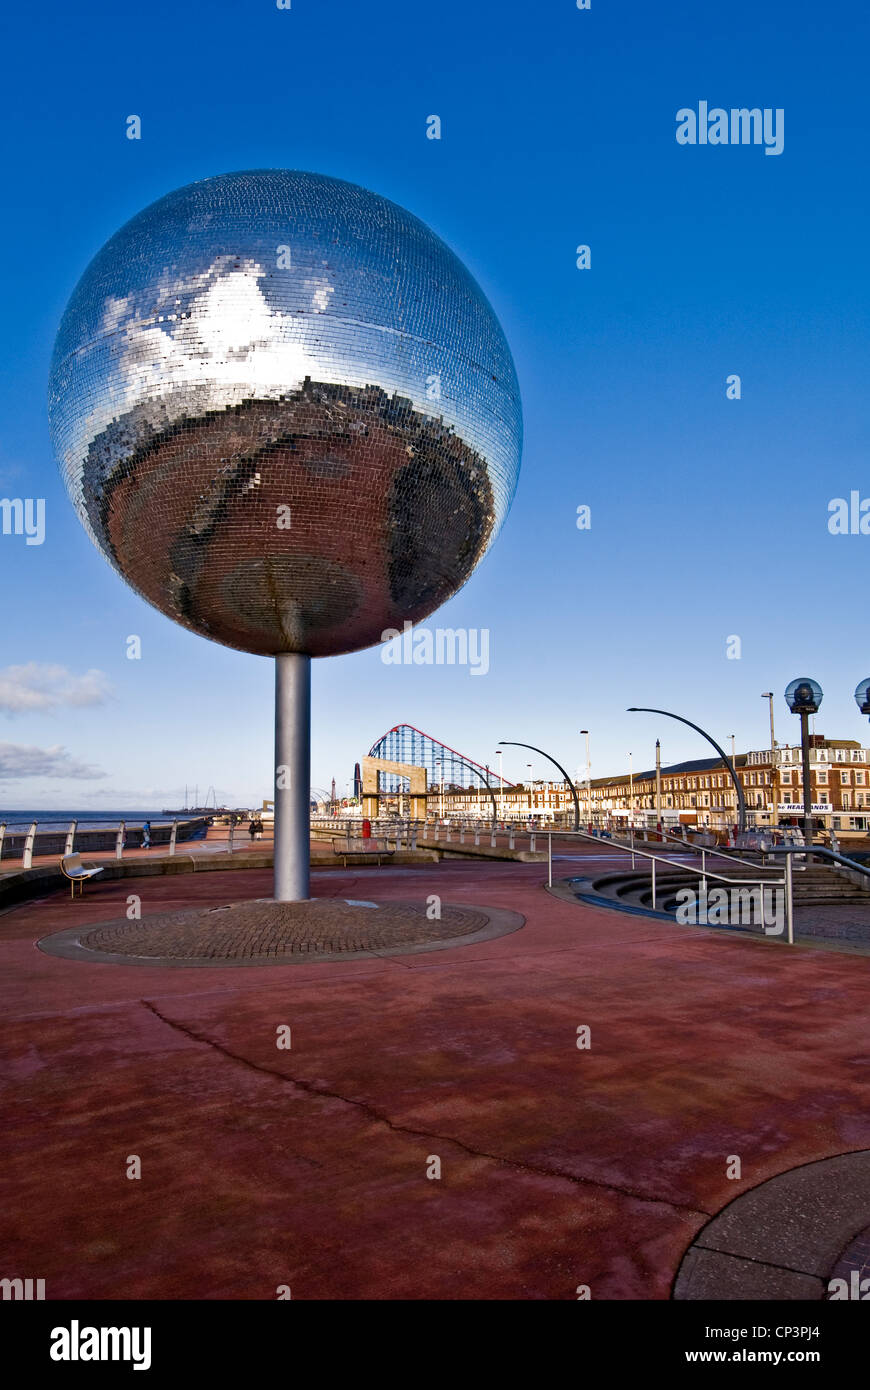 The mirror ball 'They Shoot Horses, Don't They' at Blackpool pleasure beach, Lancashire, England, UK Stock Photo